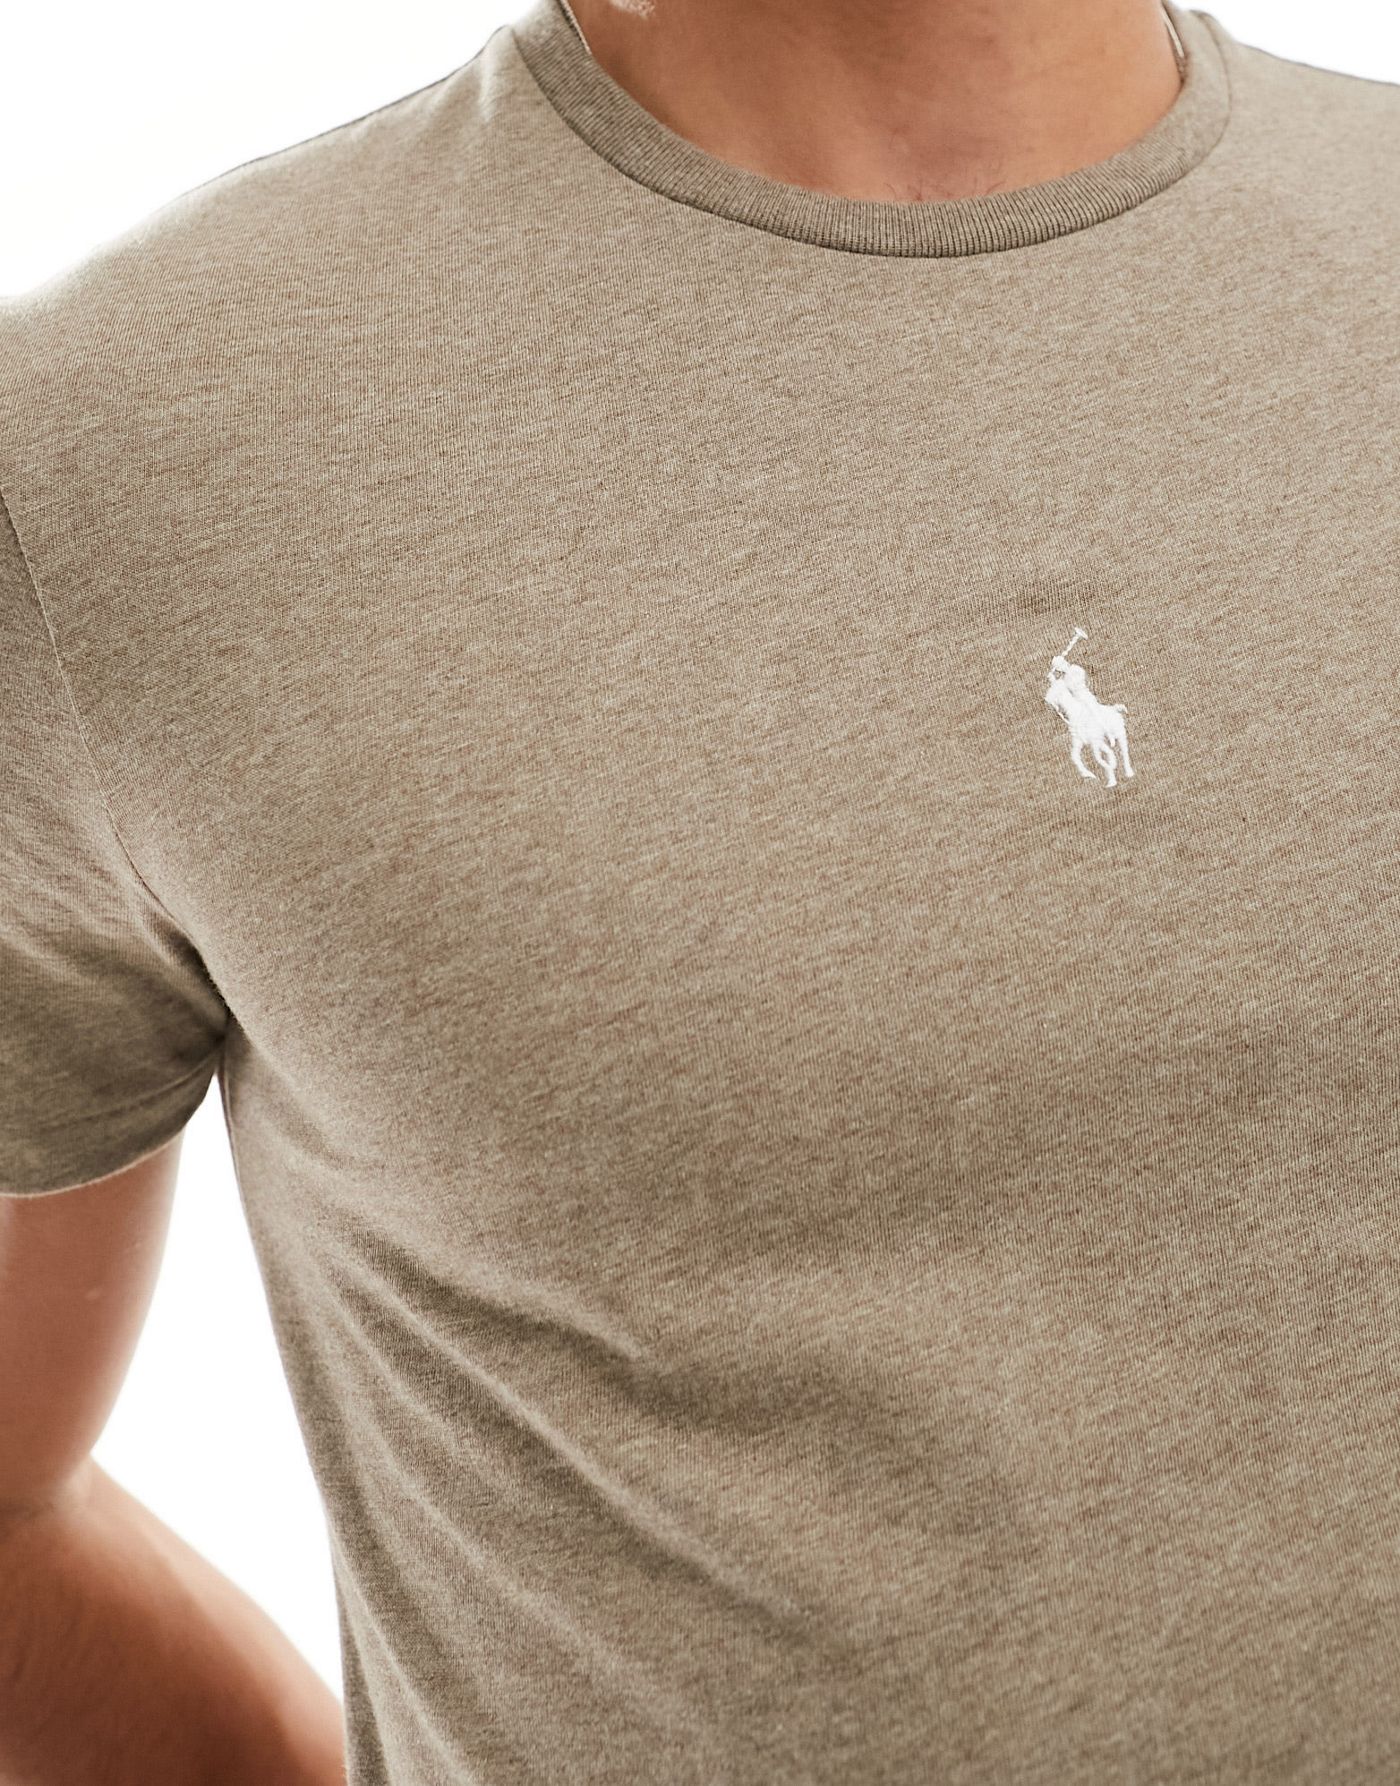 Polo Ralph Lauren central icon logo t-shirt in beige marl